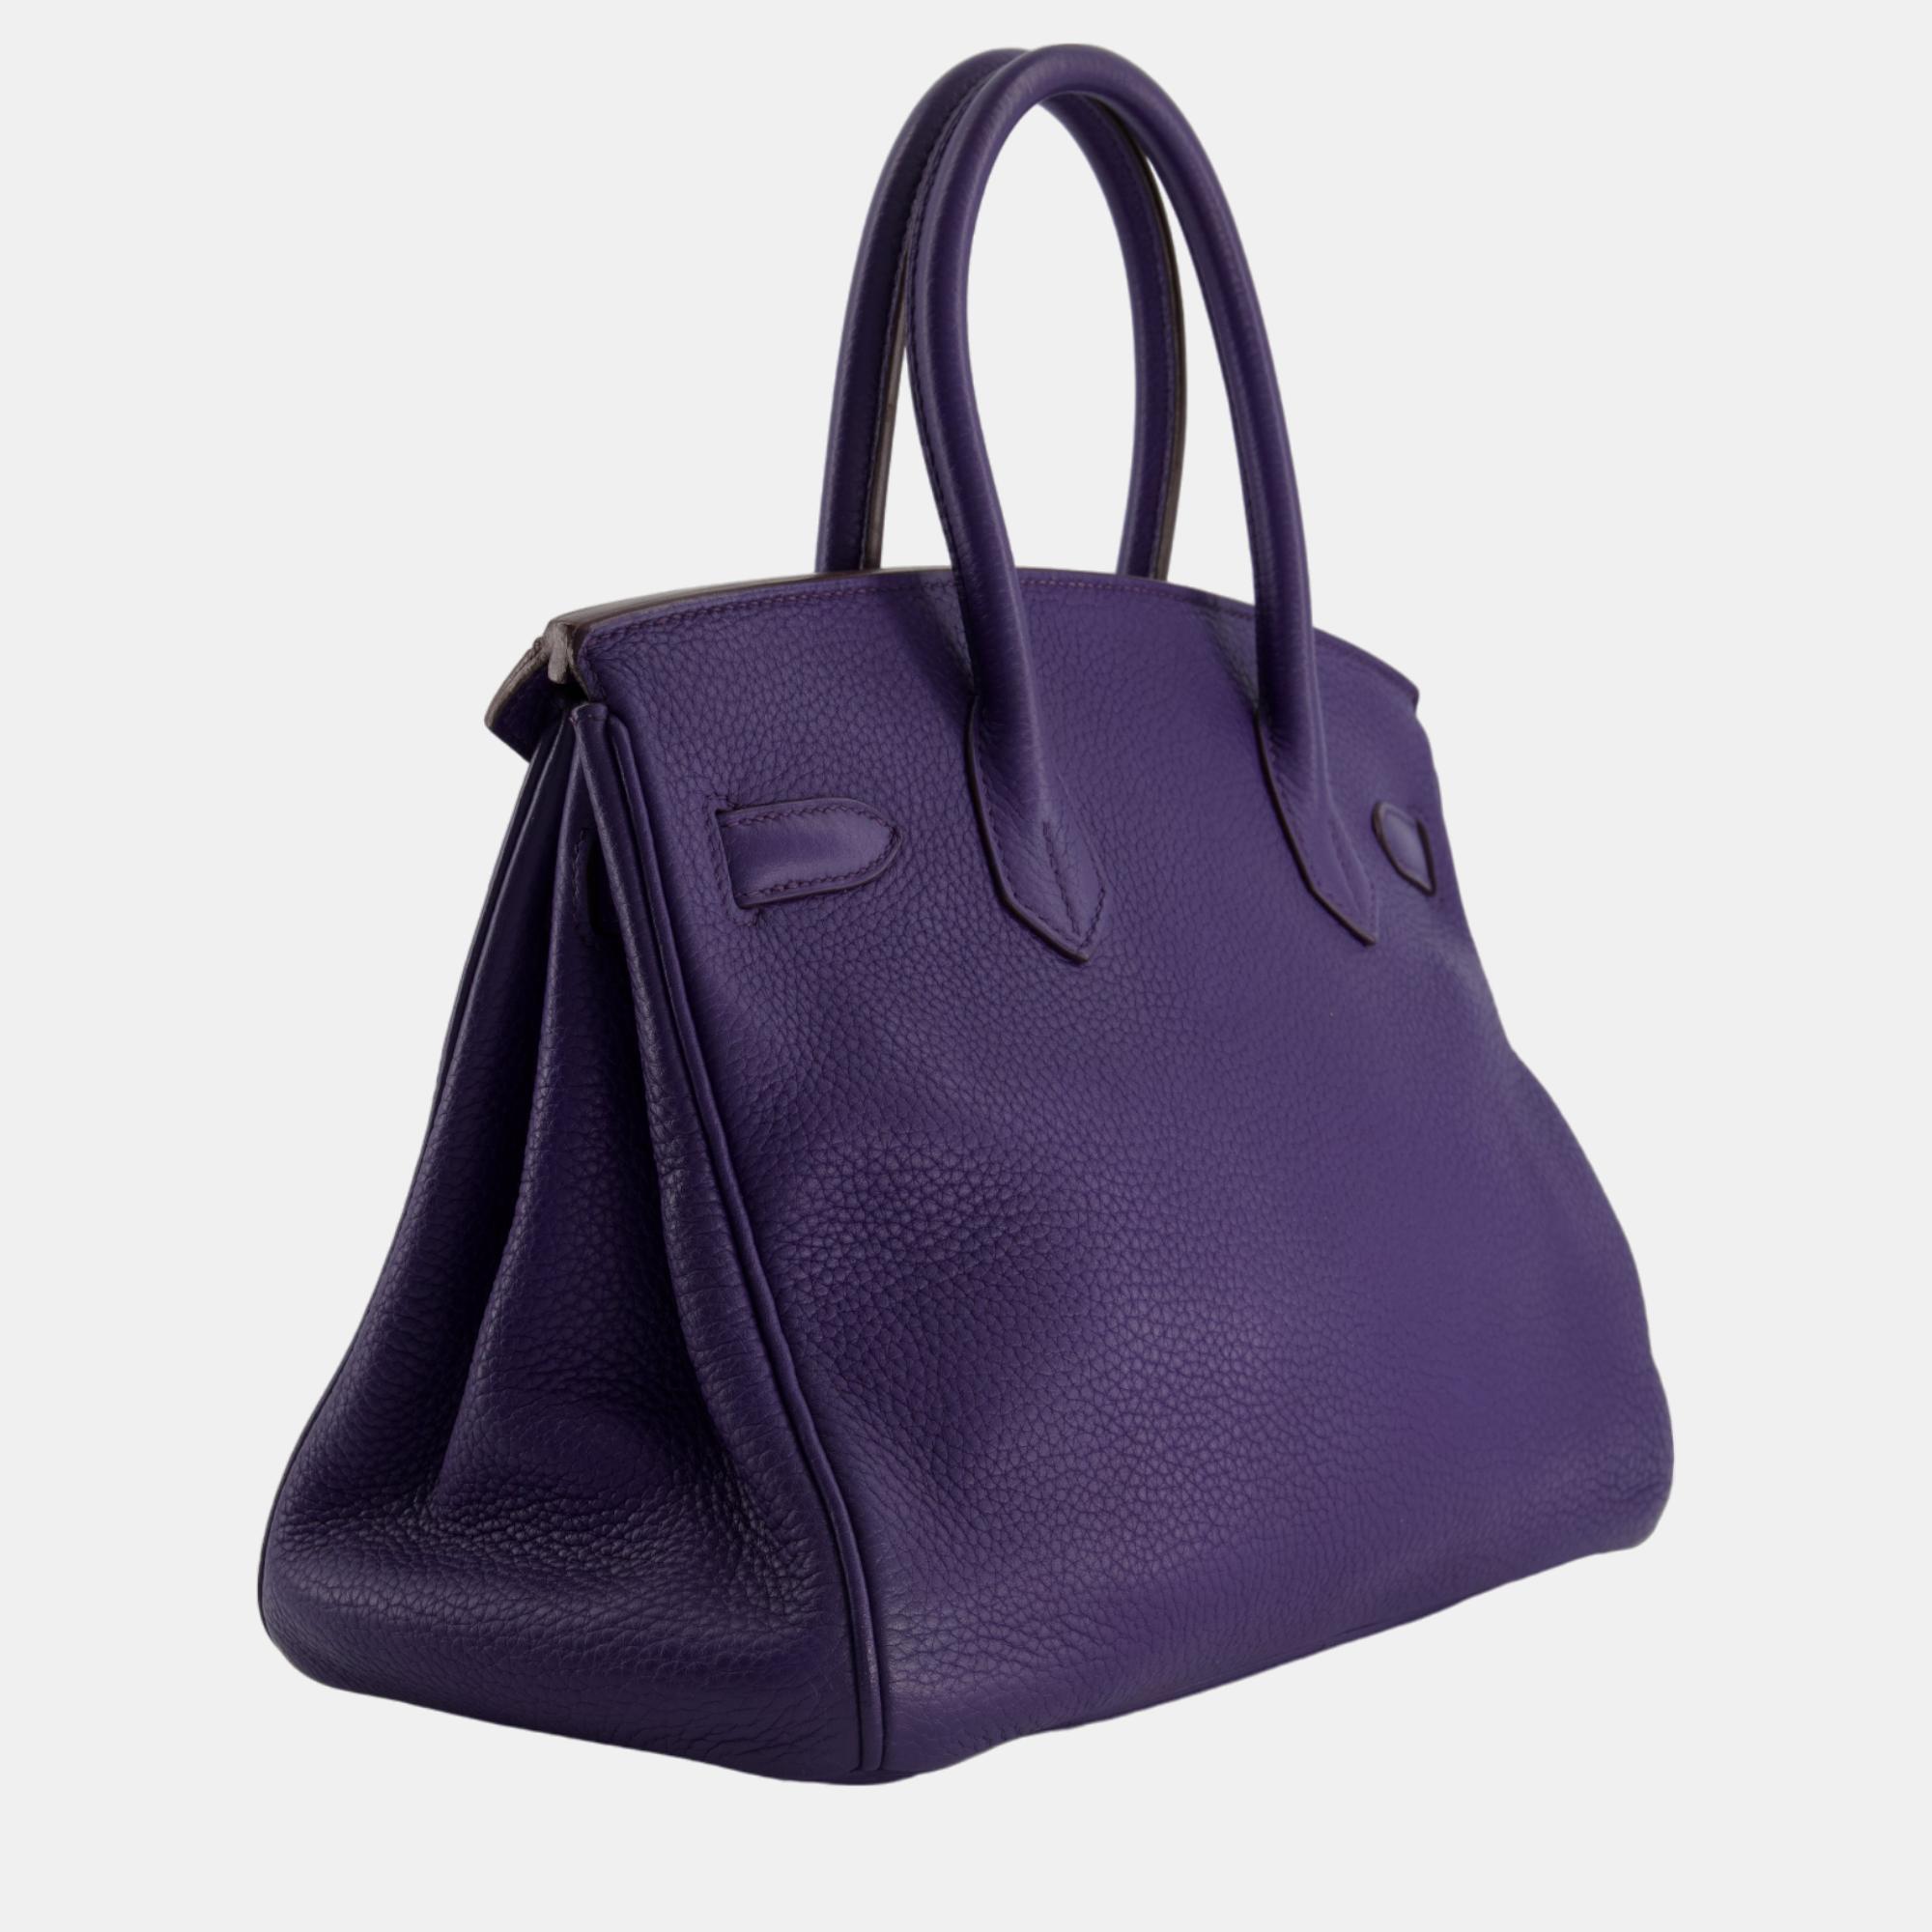 Hermes Birkin 30cm Ultra Violet In Togo Leather With Palladium Hardware Bag